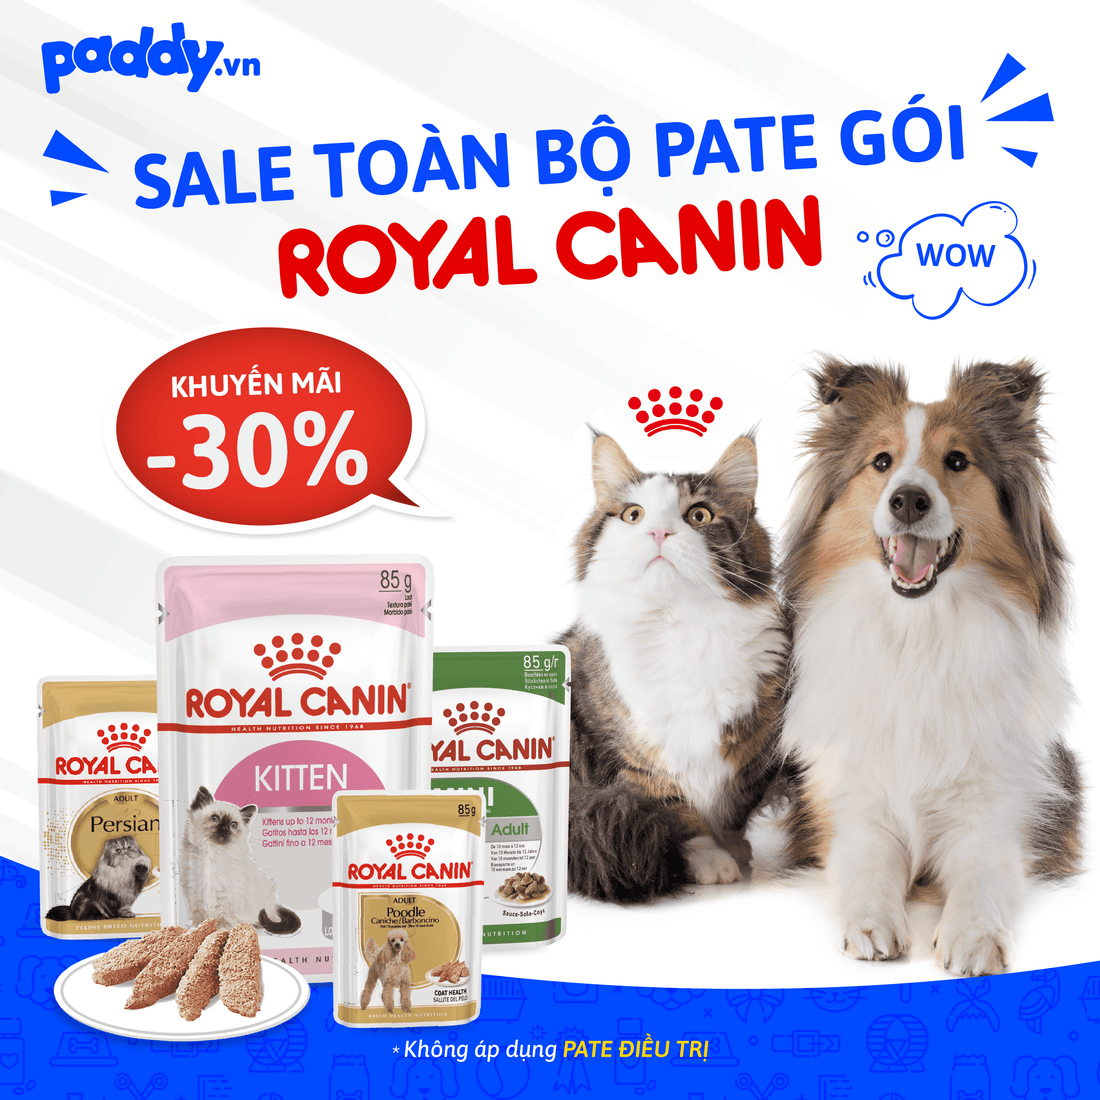 THỨC ĂN ROYAL CANIN SALE UP TO 30% - Paddy Pet Shop